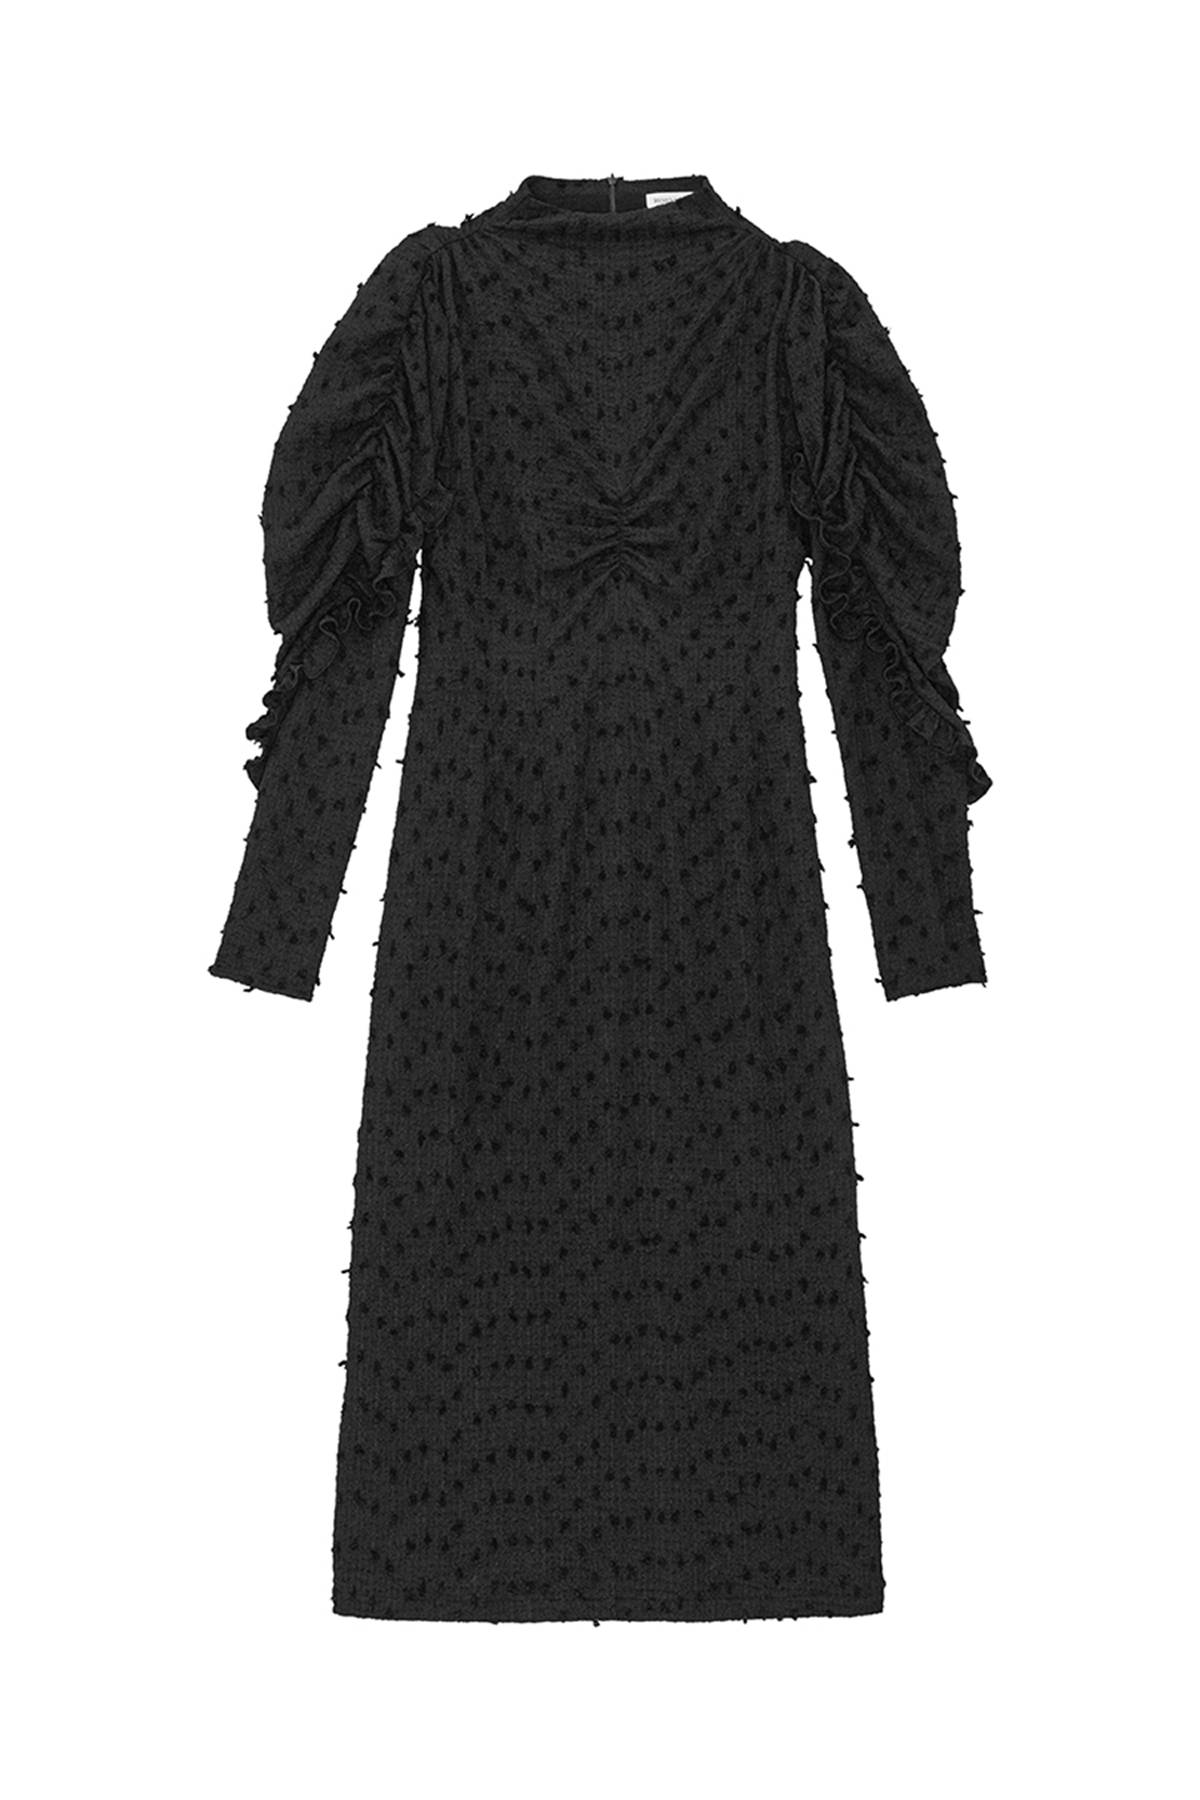 Hofmann Copenhagen Lovetta Dress - Black Stretch Fringe